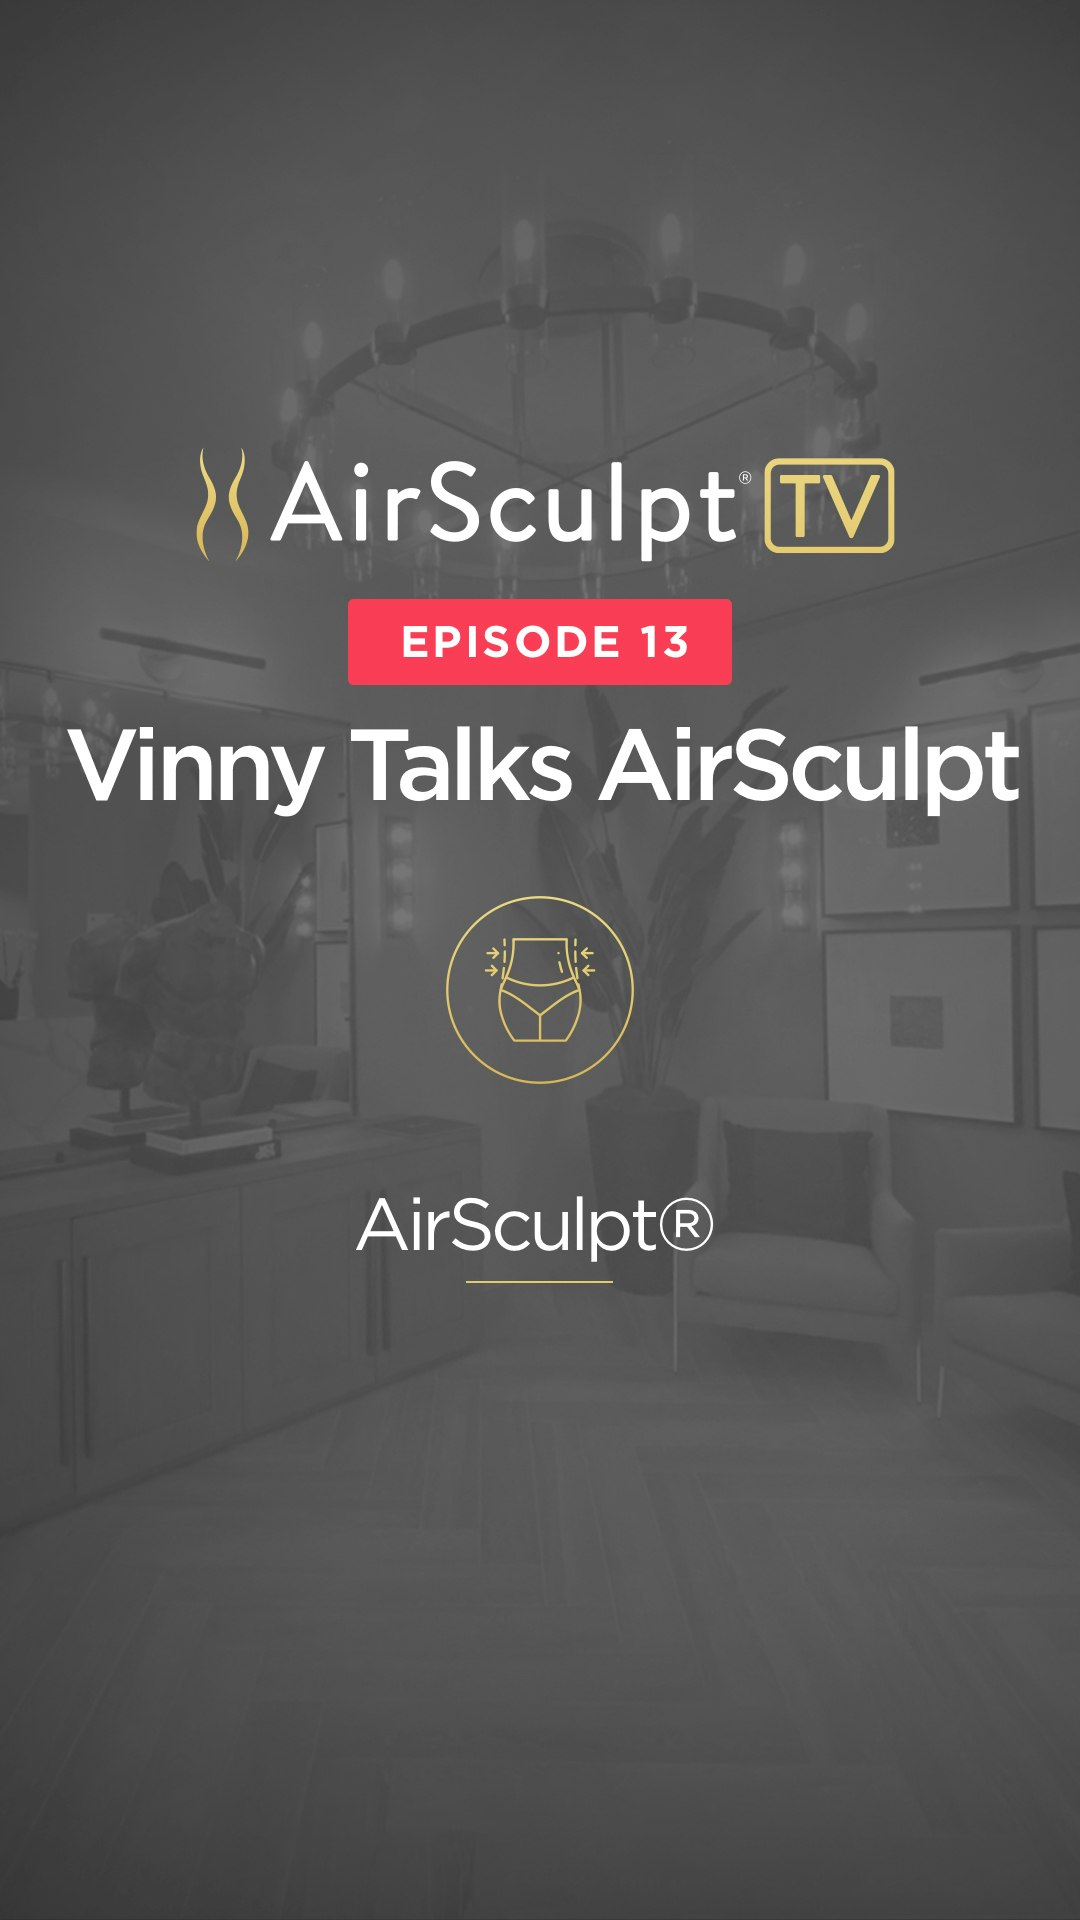 Vinny's airsculpt tv thumbnail